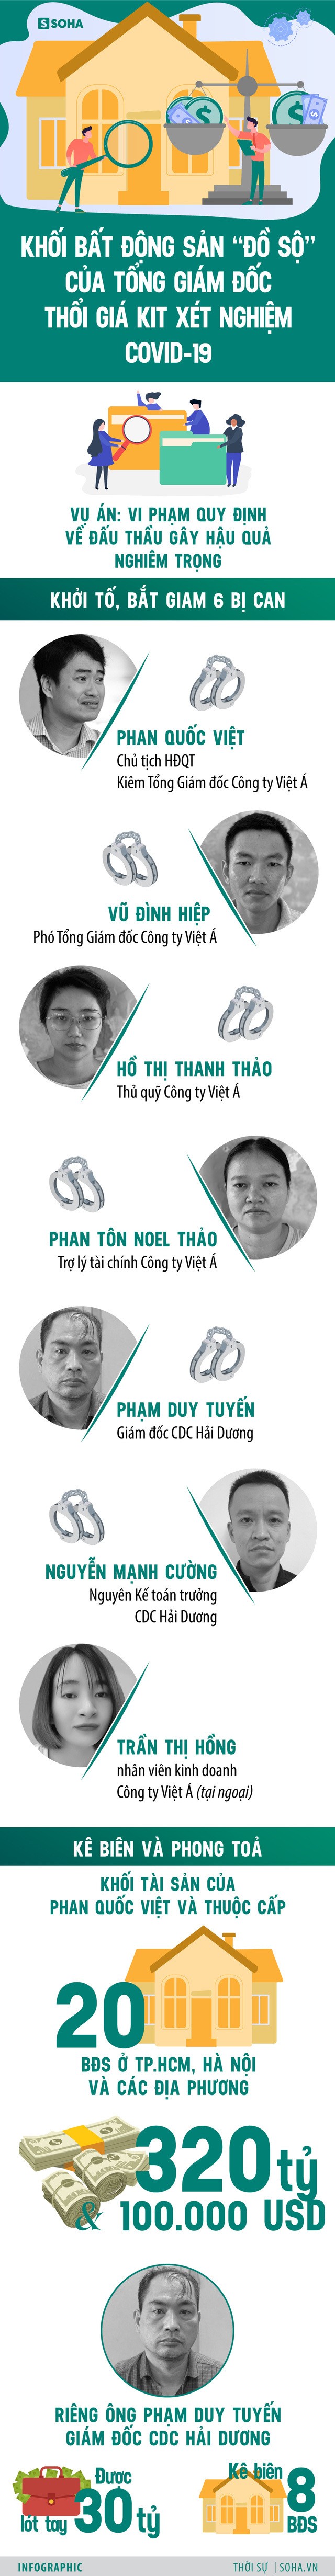 Khoi tai san cua Phan Quoc Viet - ong trum kit test Covid-19 Viet A moi bi bat khung co nao?